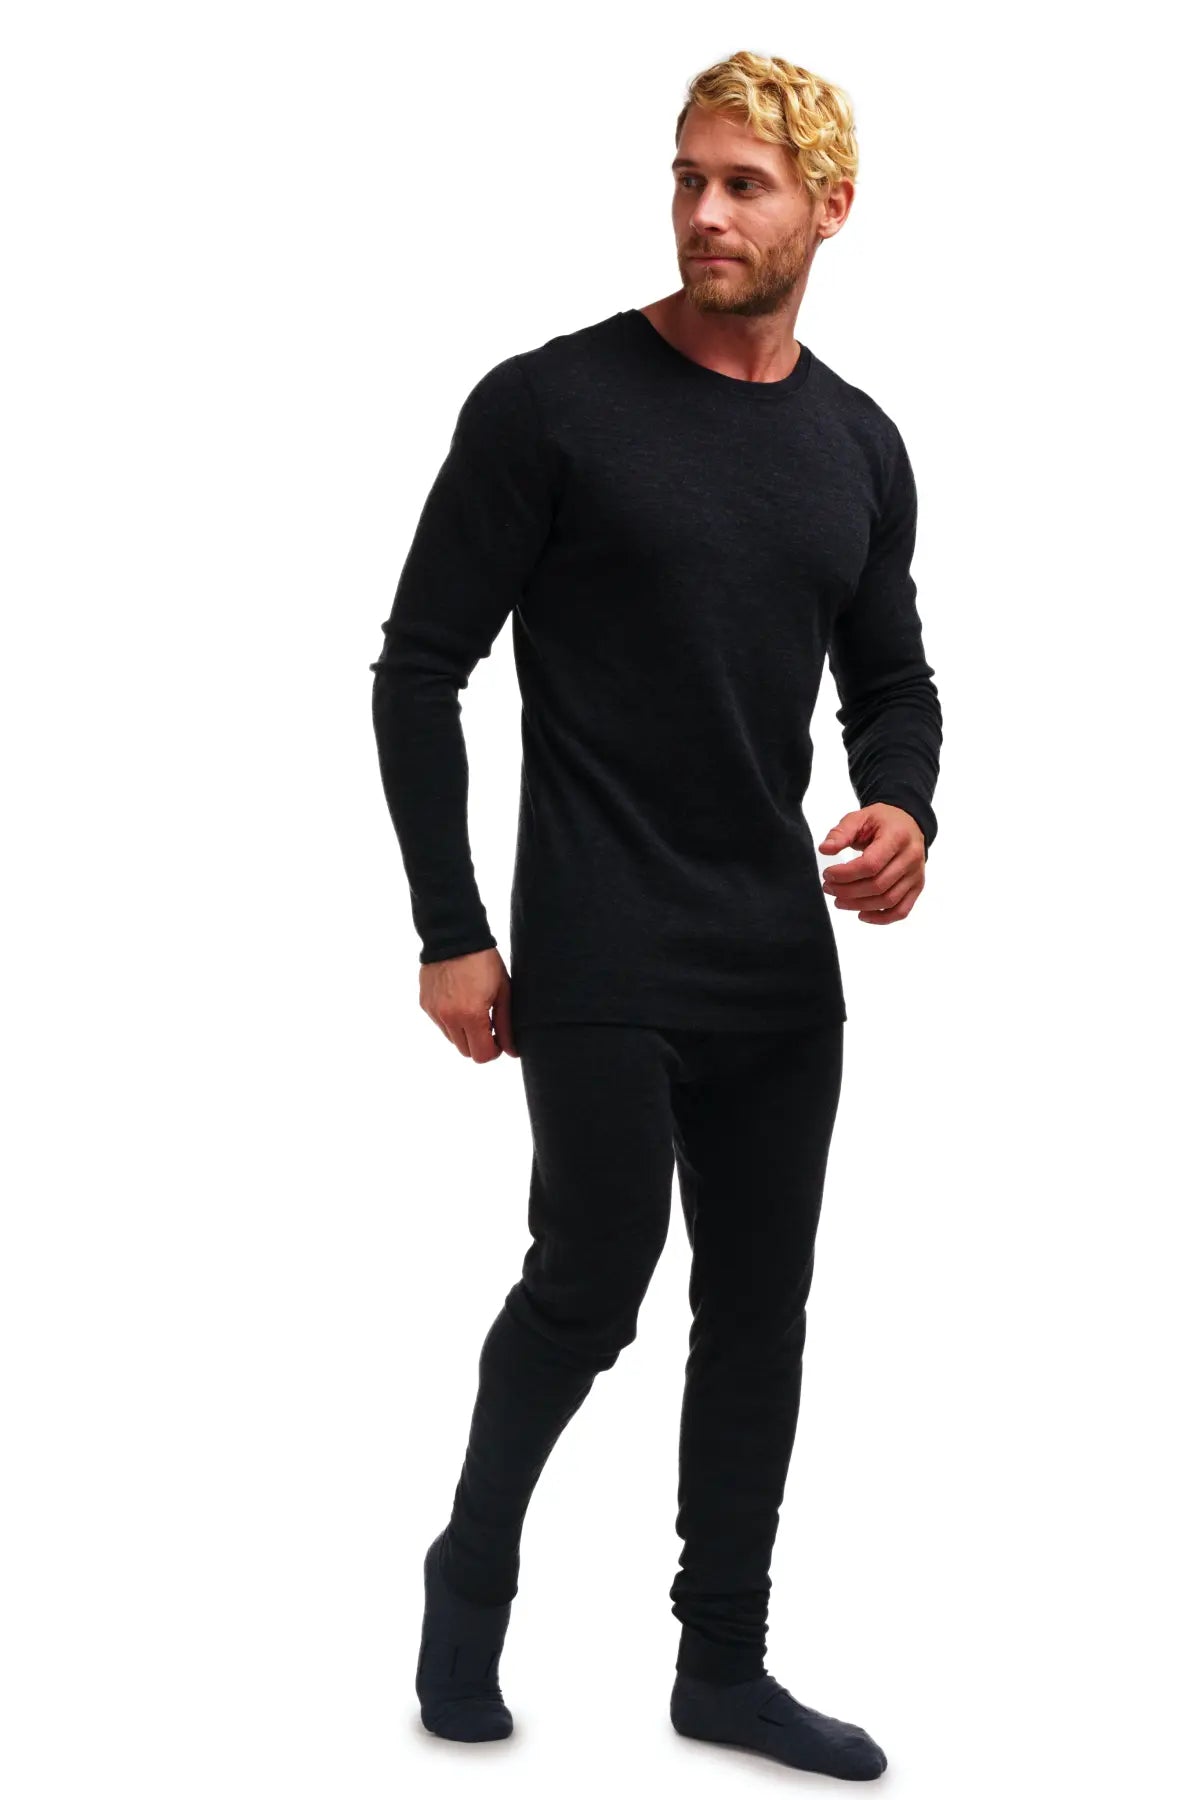 Merino.tech Merino Wool Base Layer Set Mens - Midweight Merino Wool Thermal  Underwear Men Long John Set - Top and Bottom (Small, 250 Black)